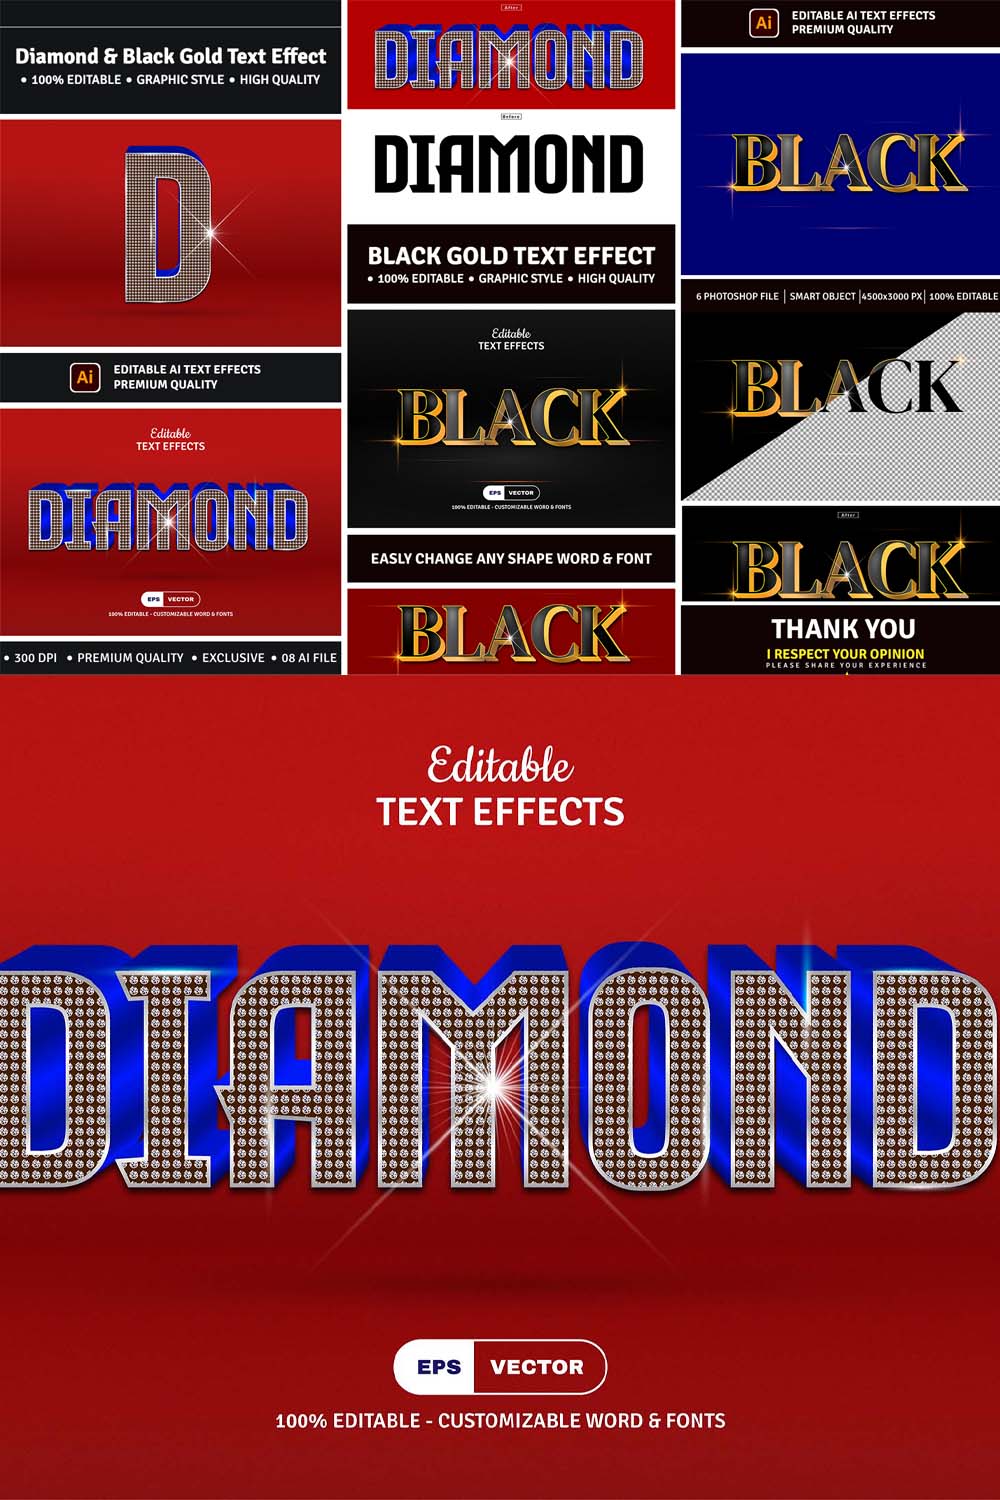 Diamond & Black Gold Text Effect pinterest preview image.